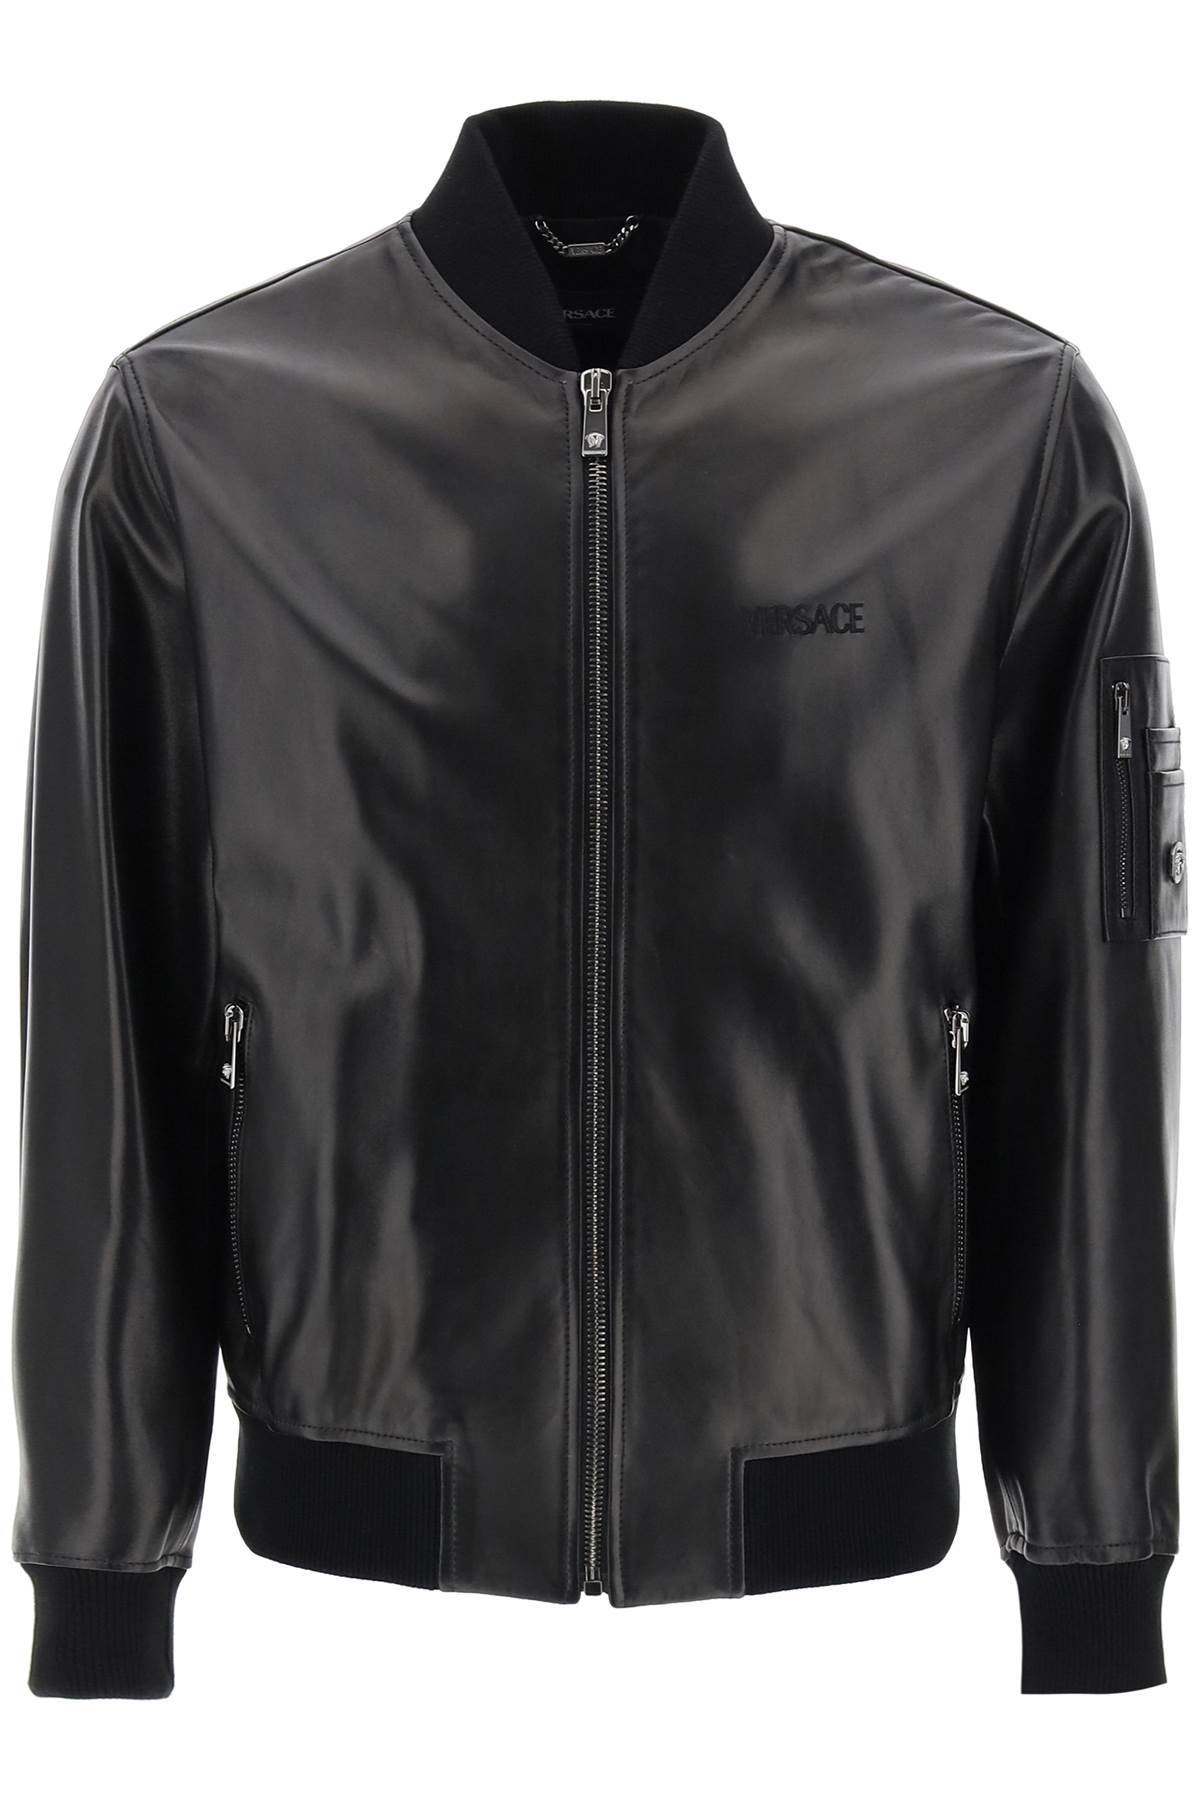 Versace VERSACE leather bomber jacket